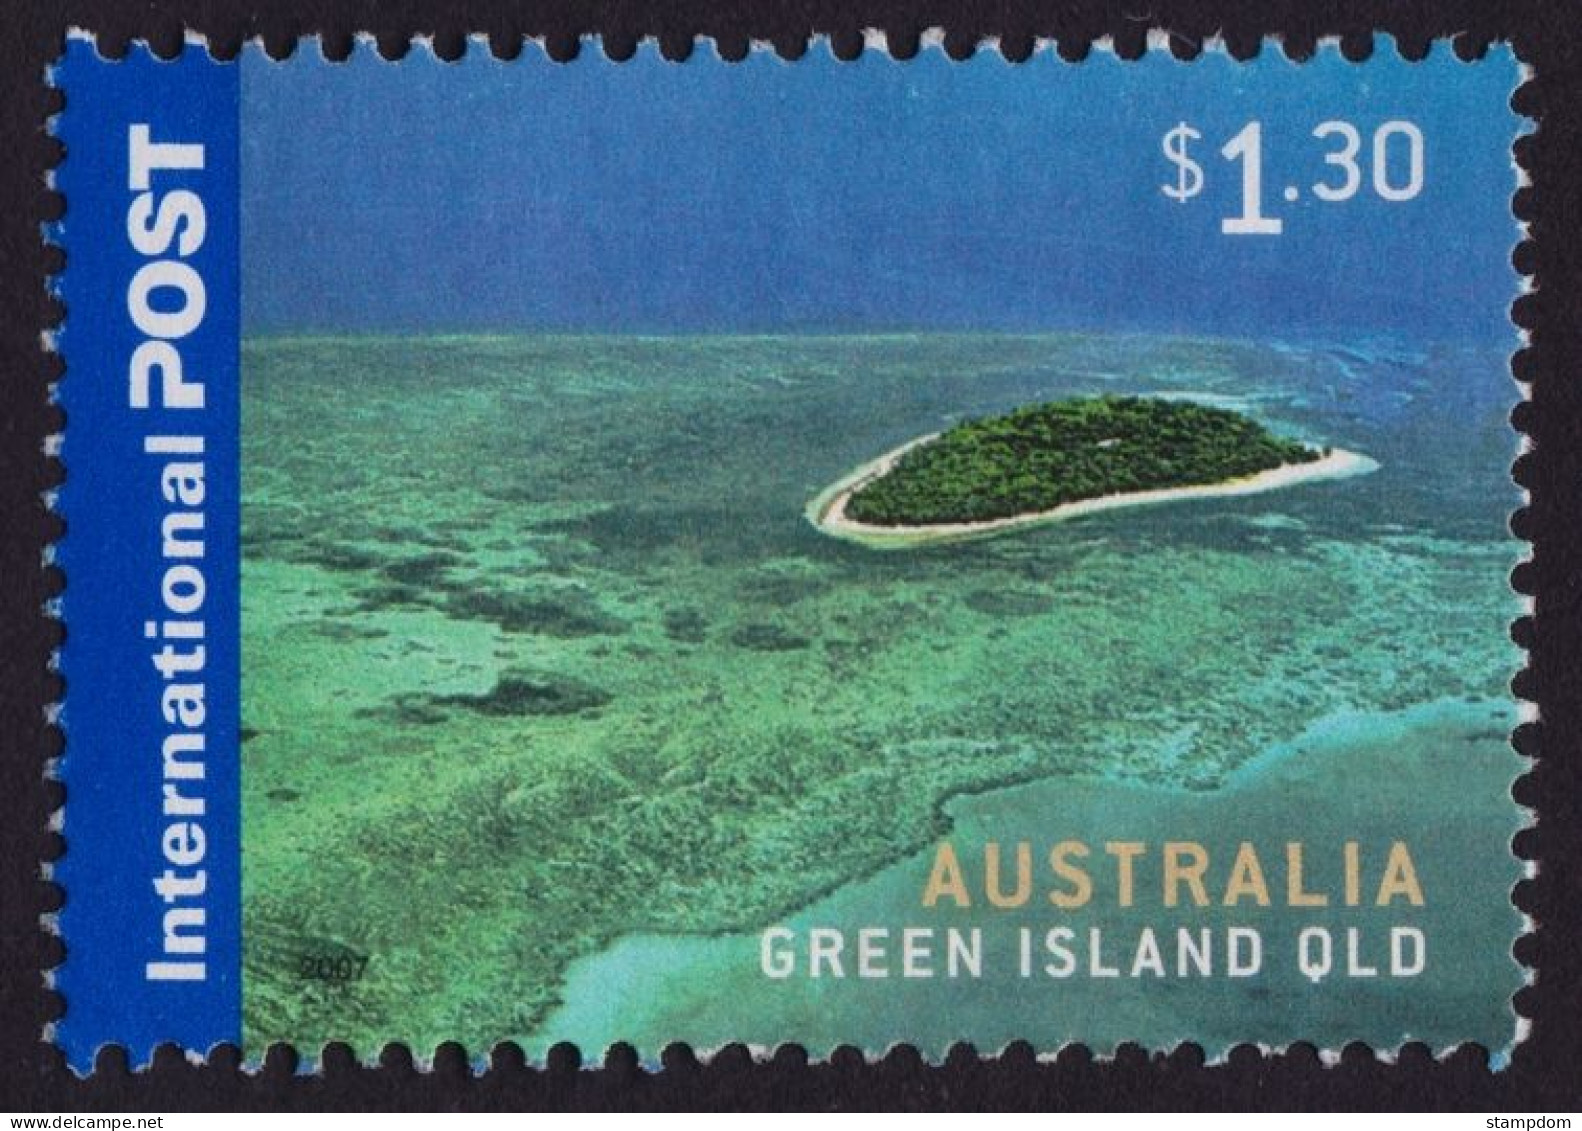 AUSTRALIA 2007 Islands $1.30 Green Island Sc#2629 USED @O425 - Oblitérés